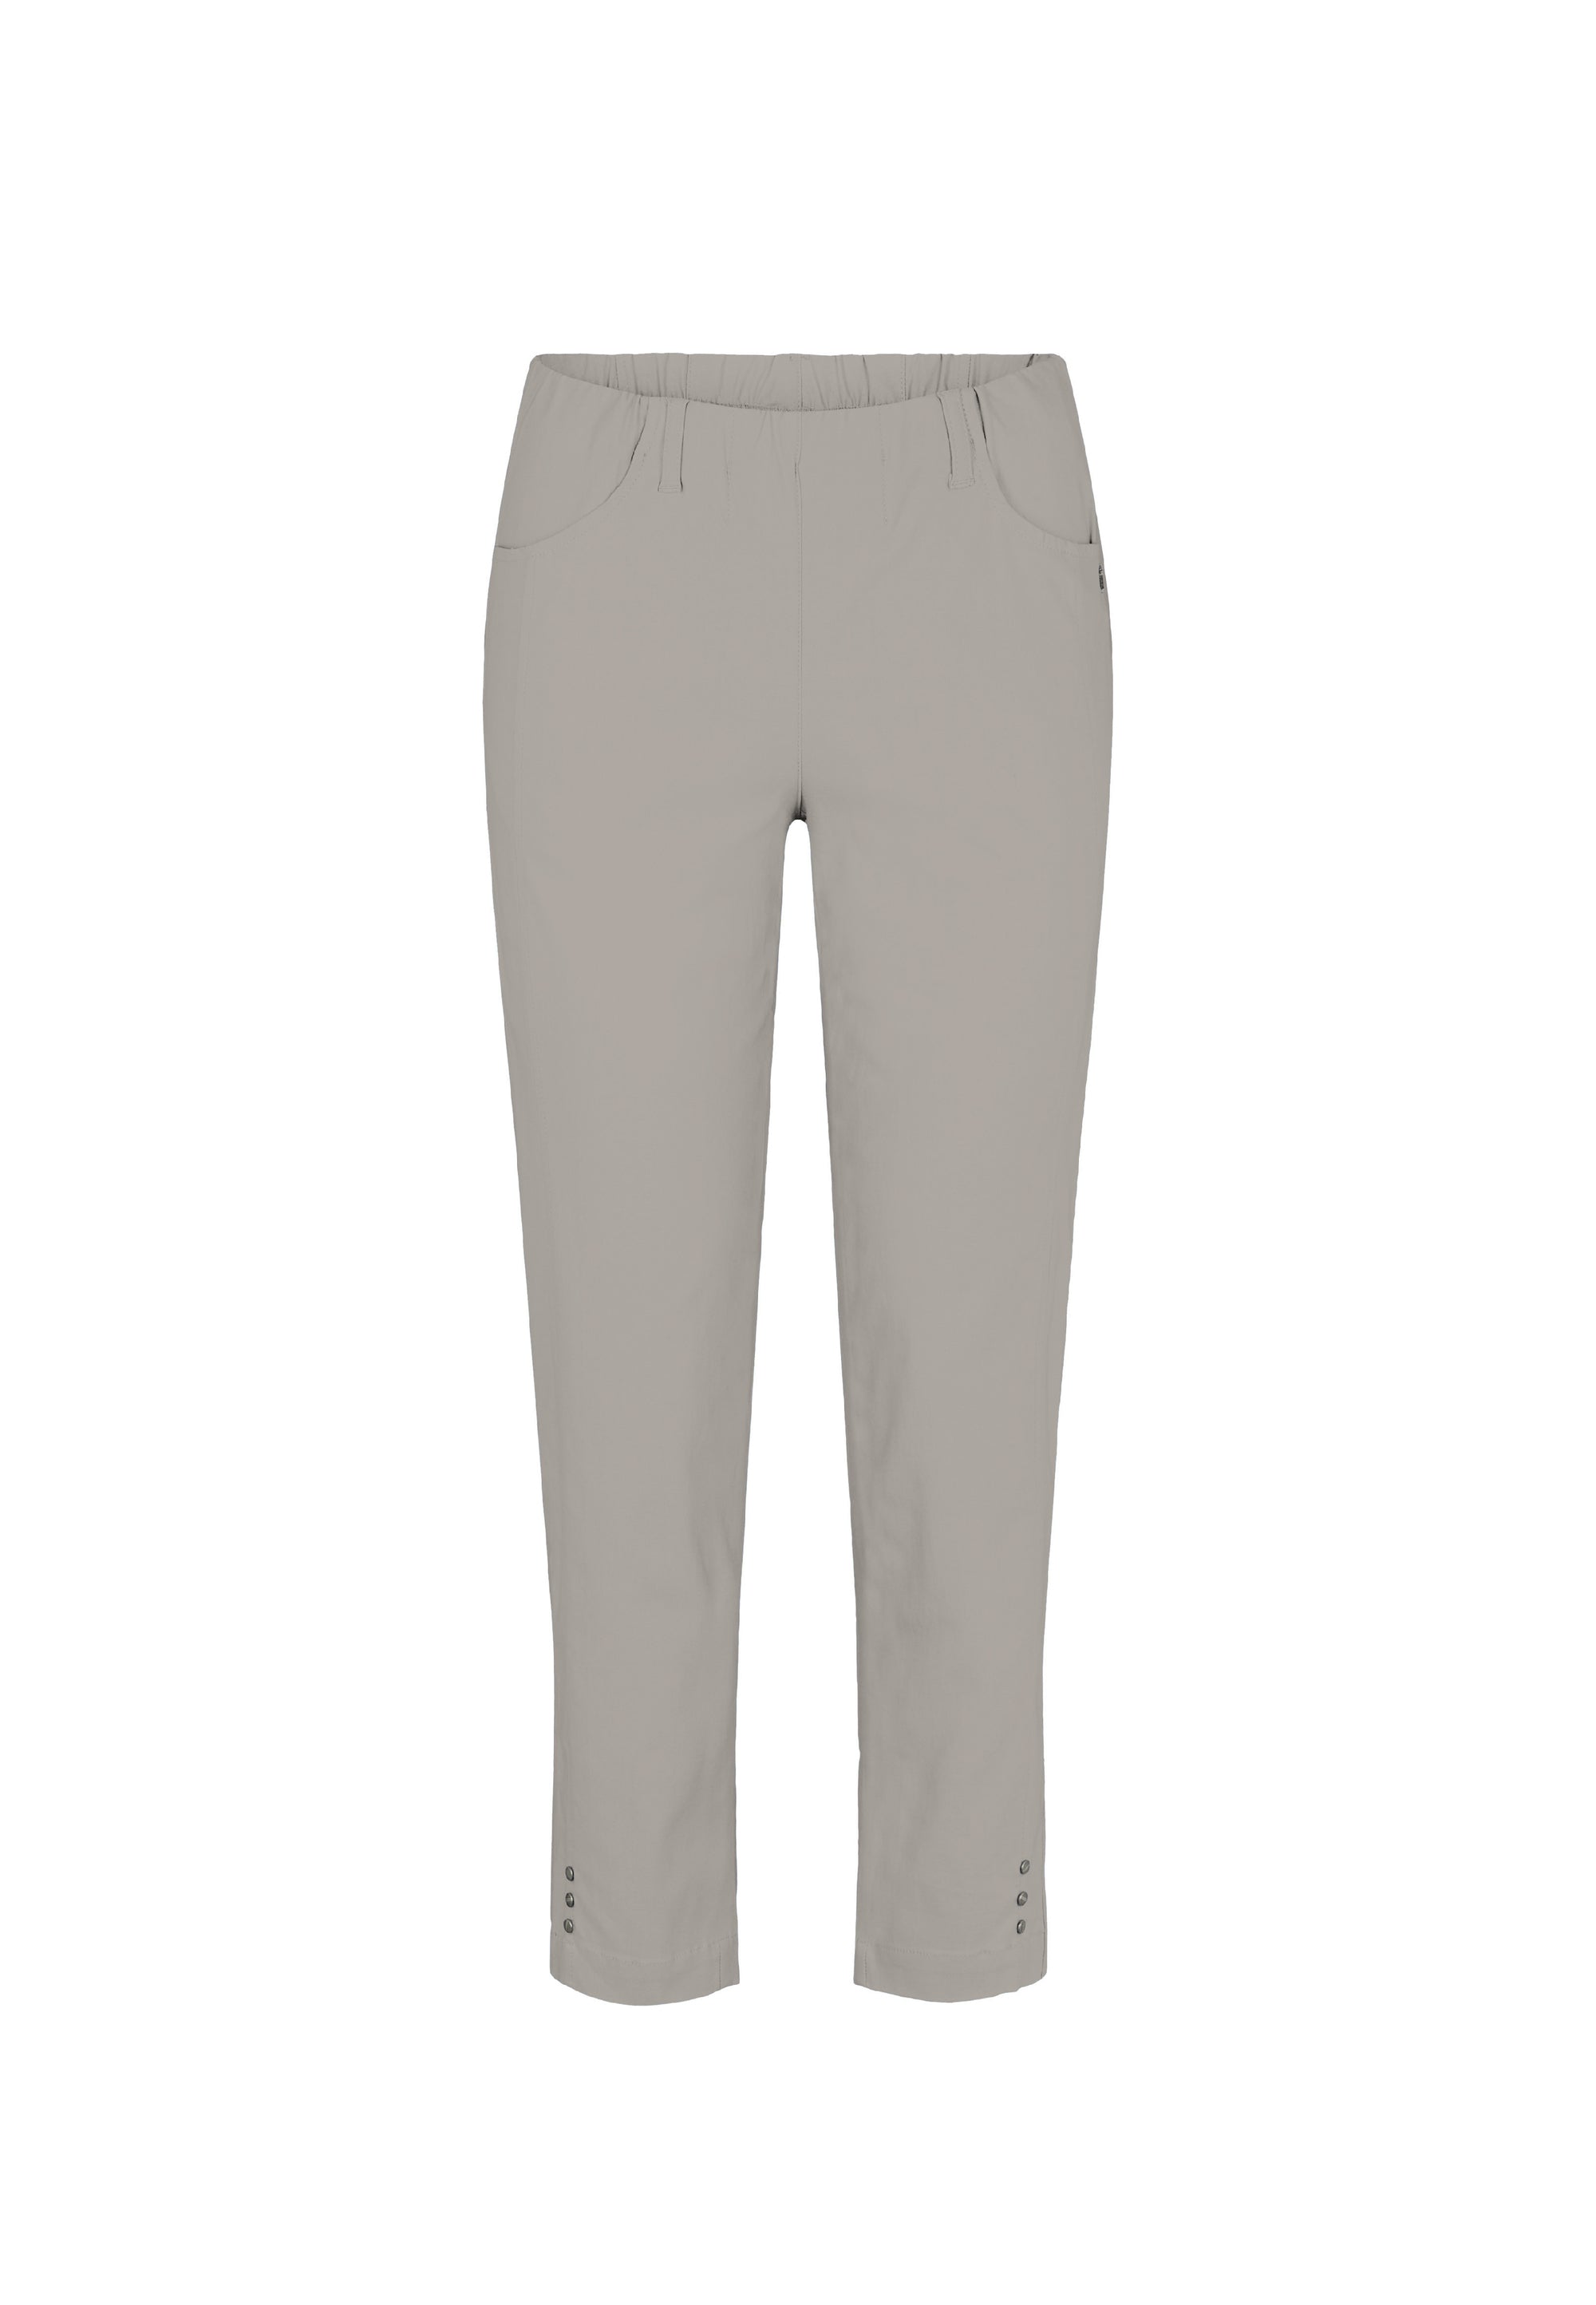 LAURIE Rose Regular Crop Trousers REGULAR 25137 Grey Sand